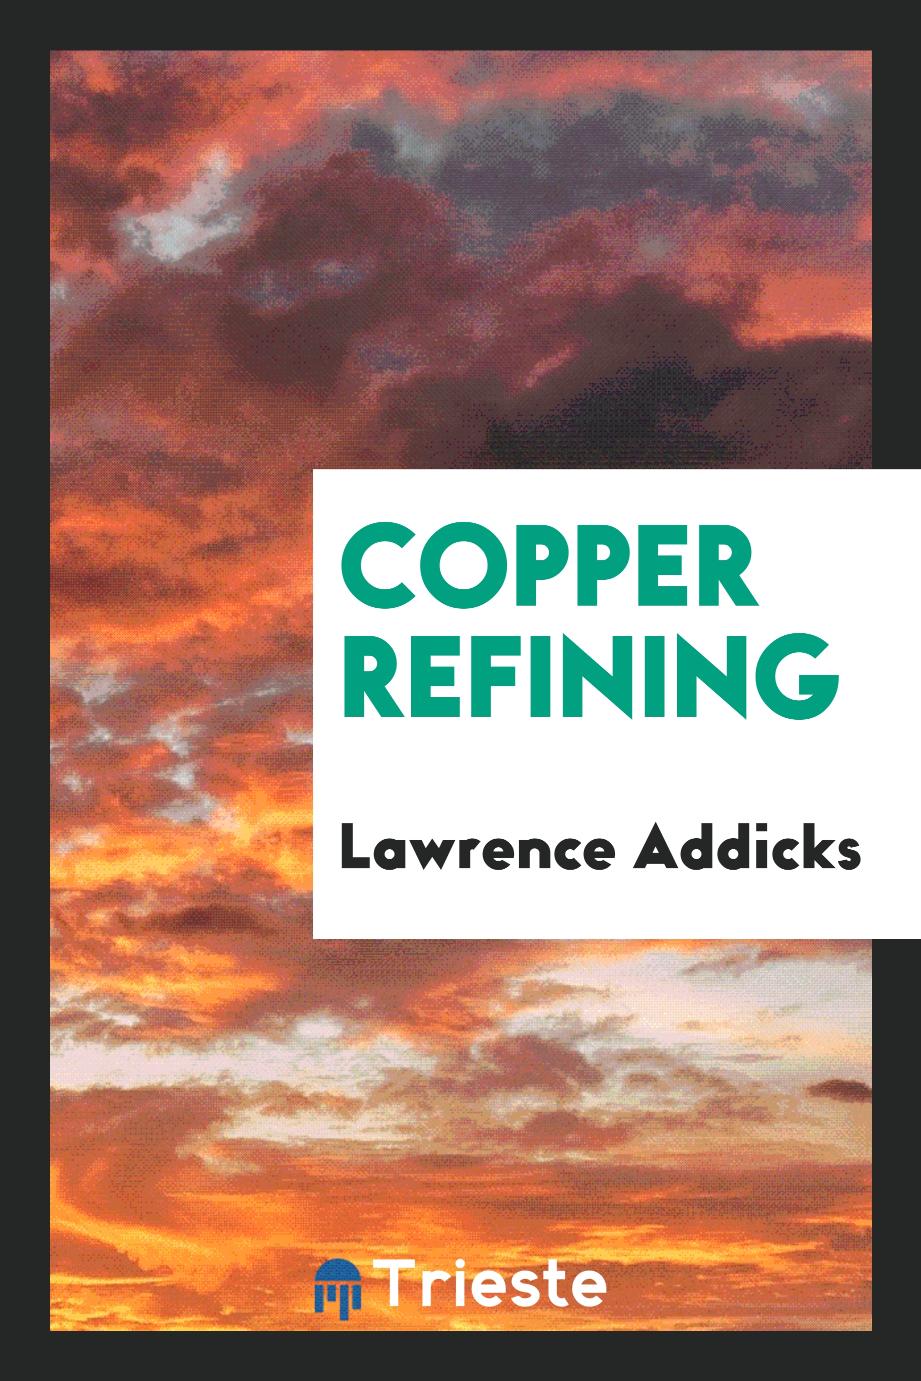 Copper refining